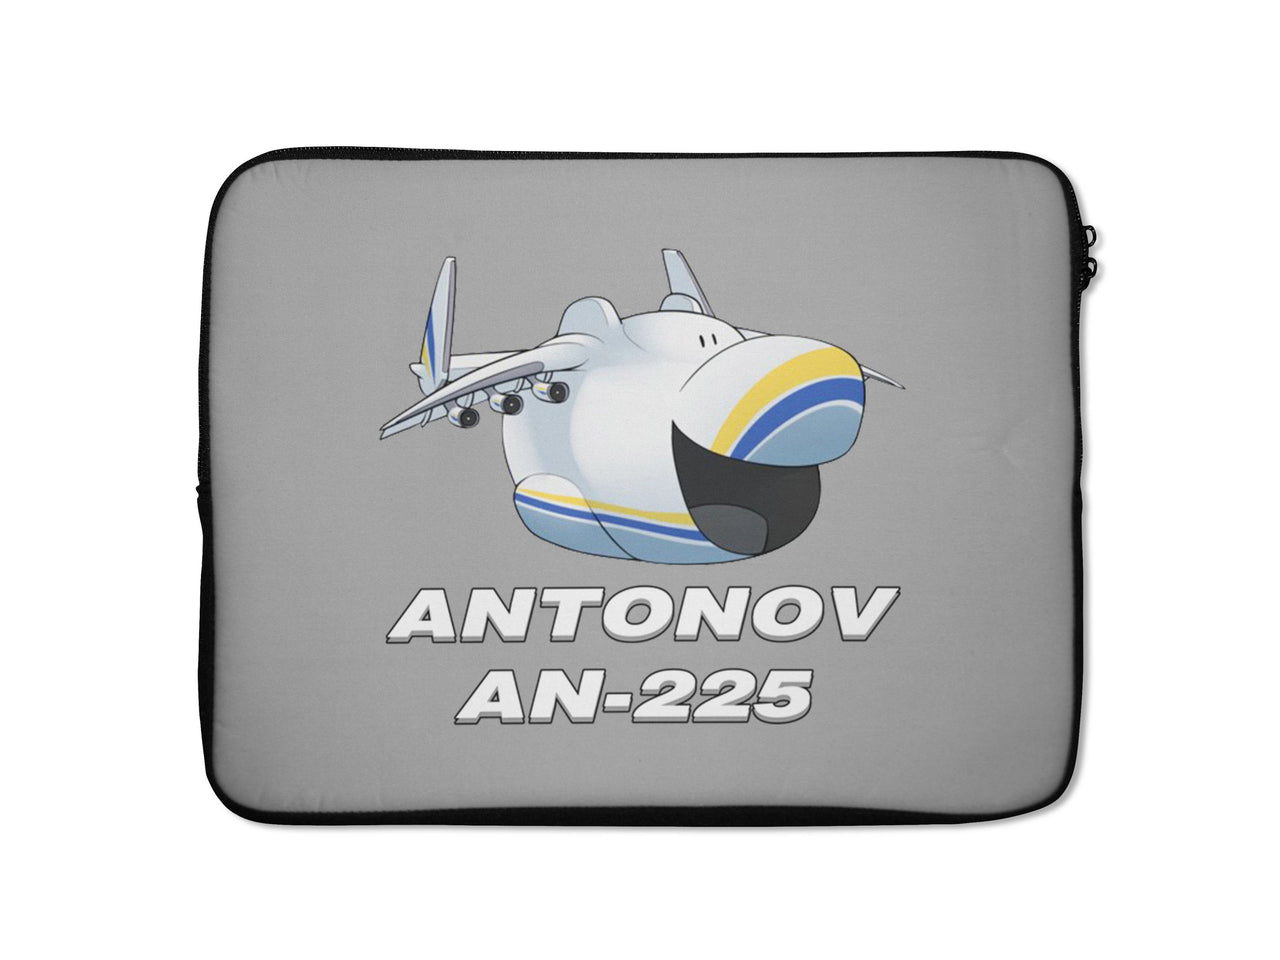 Antonov AN-225 (23) Designed Laptop & Tablet Cases